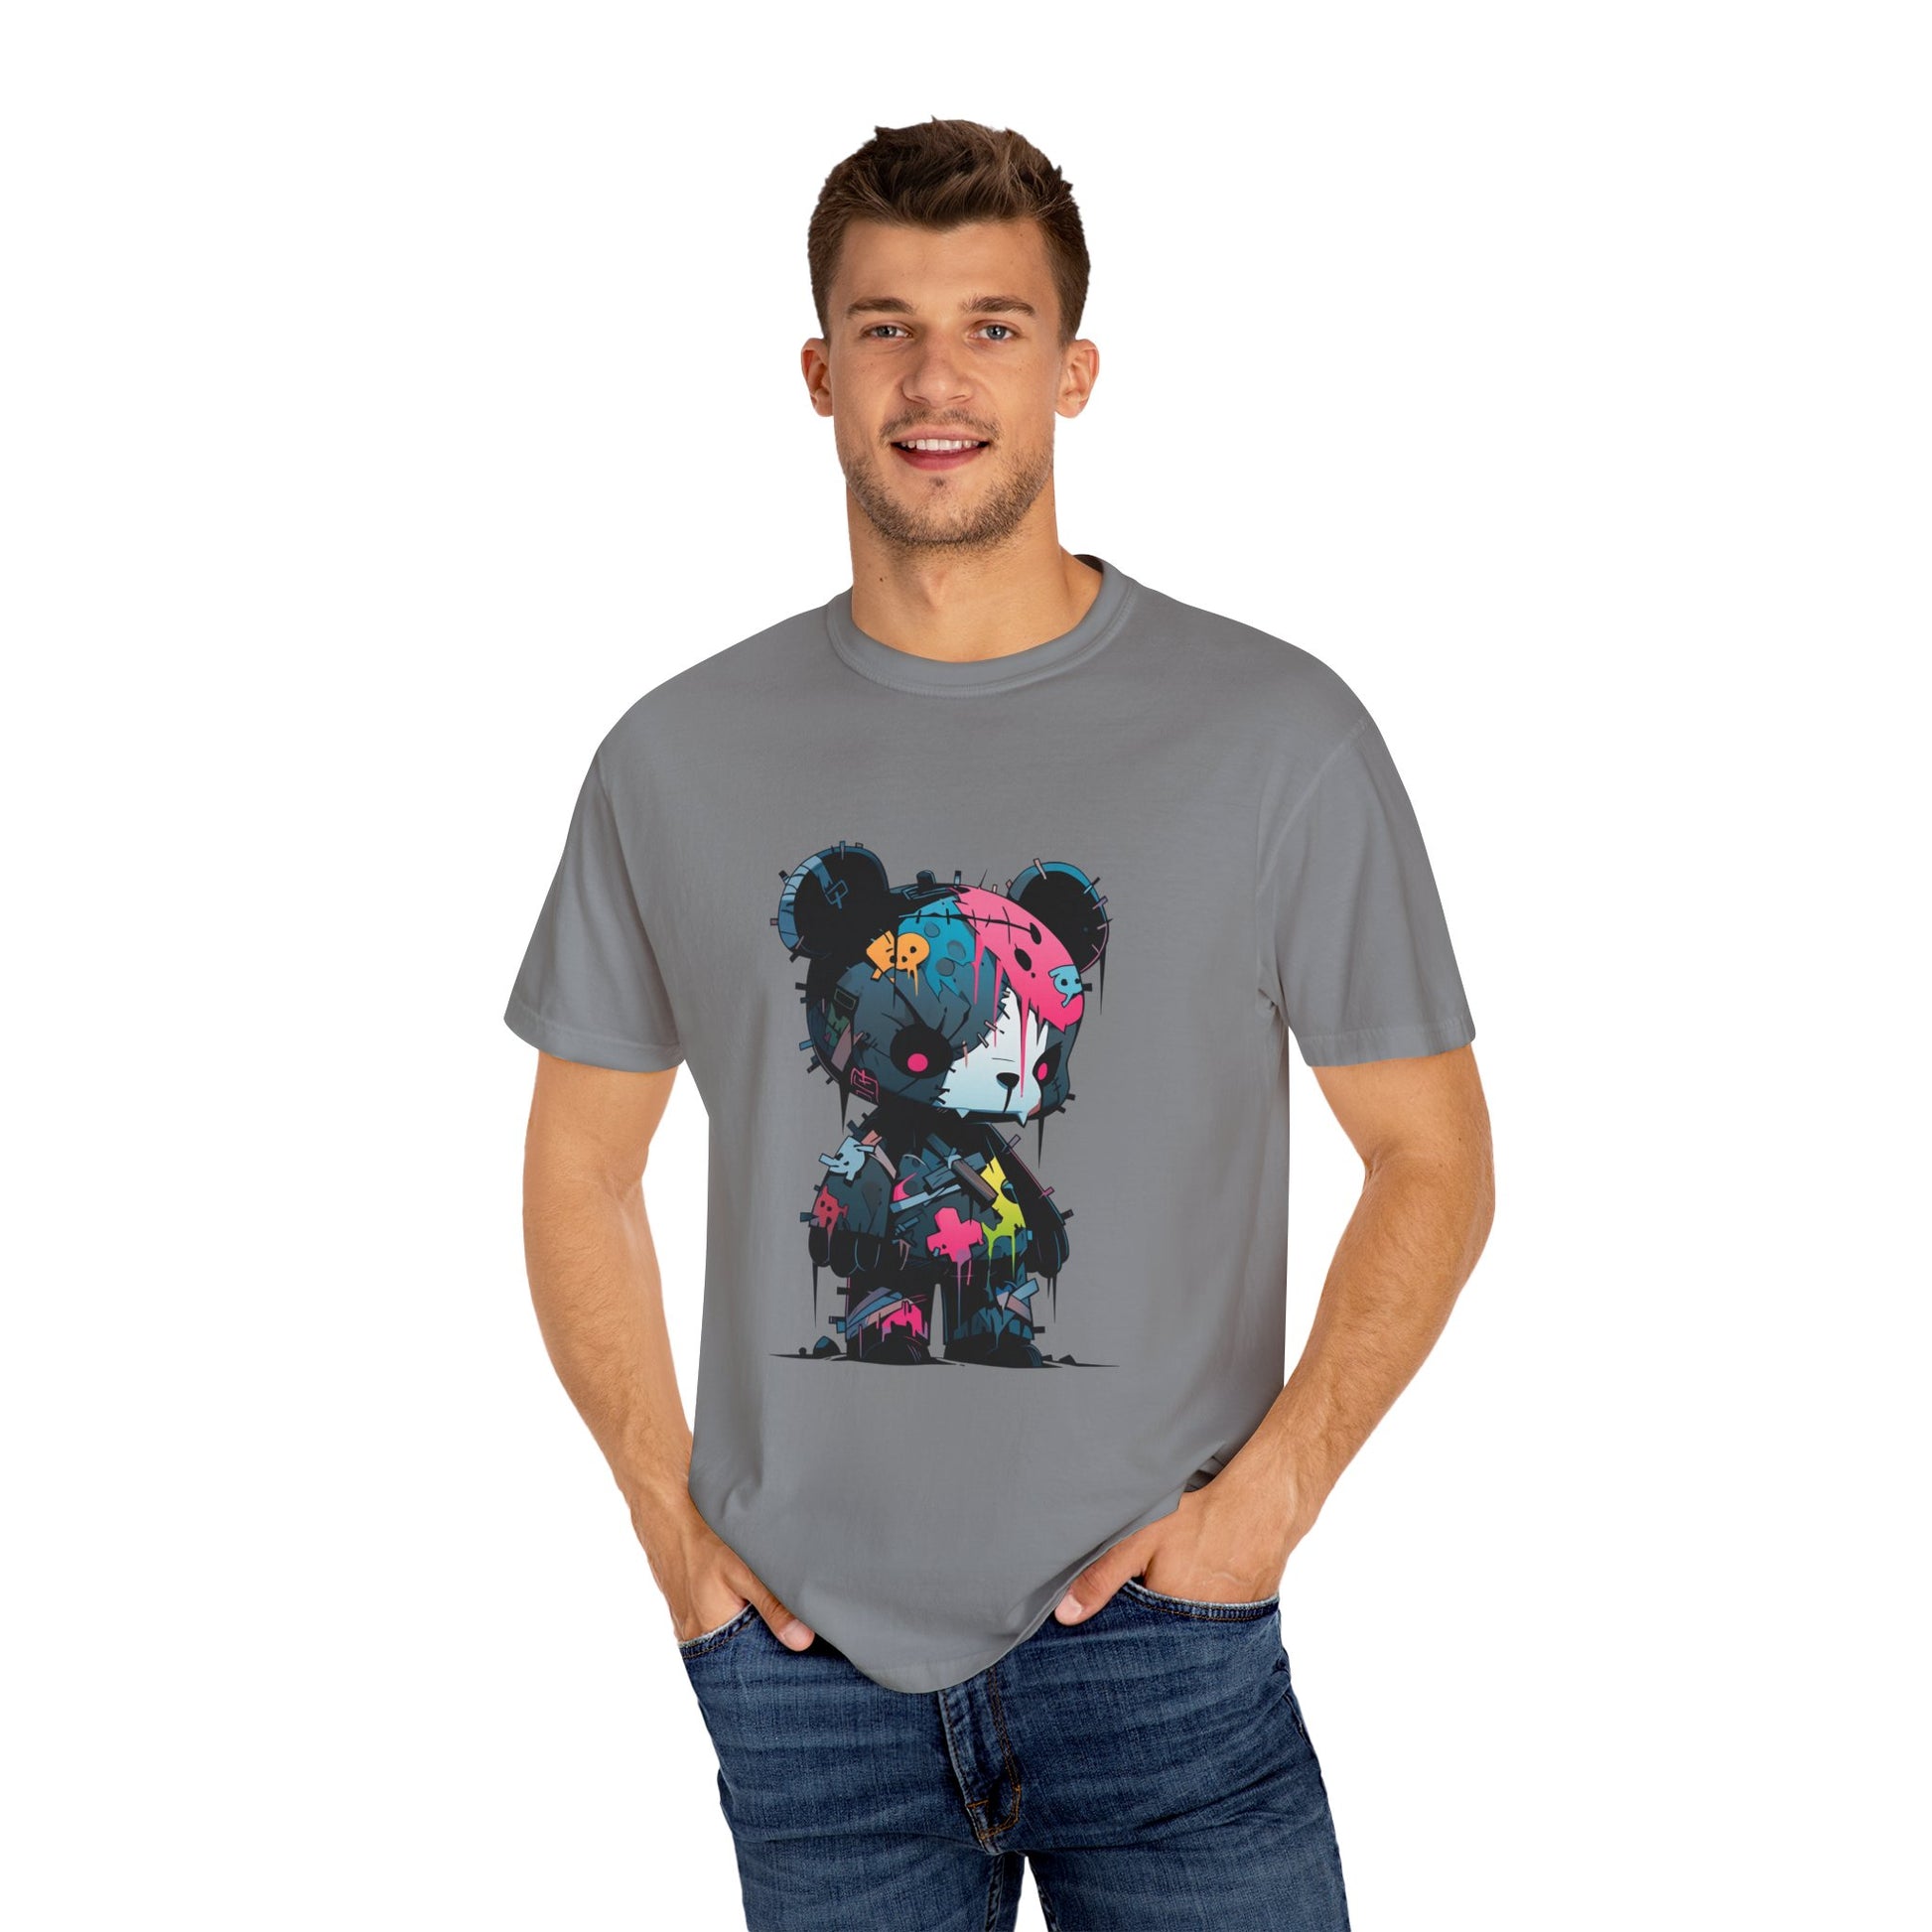 Hip Hop Teddy Bear Graphic Unisex Garment-dyed T-shirt Cotton Funny Humorous Graphic Soft Premium Unisex Men Women Grey T-shirt Birthday Gift-42